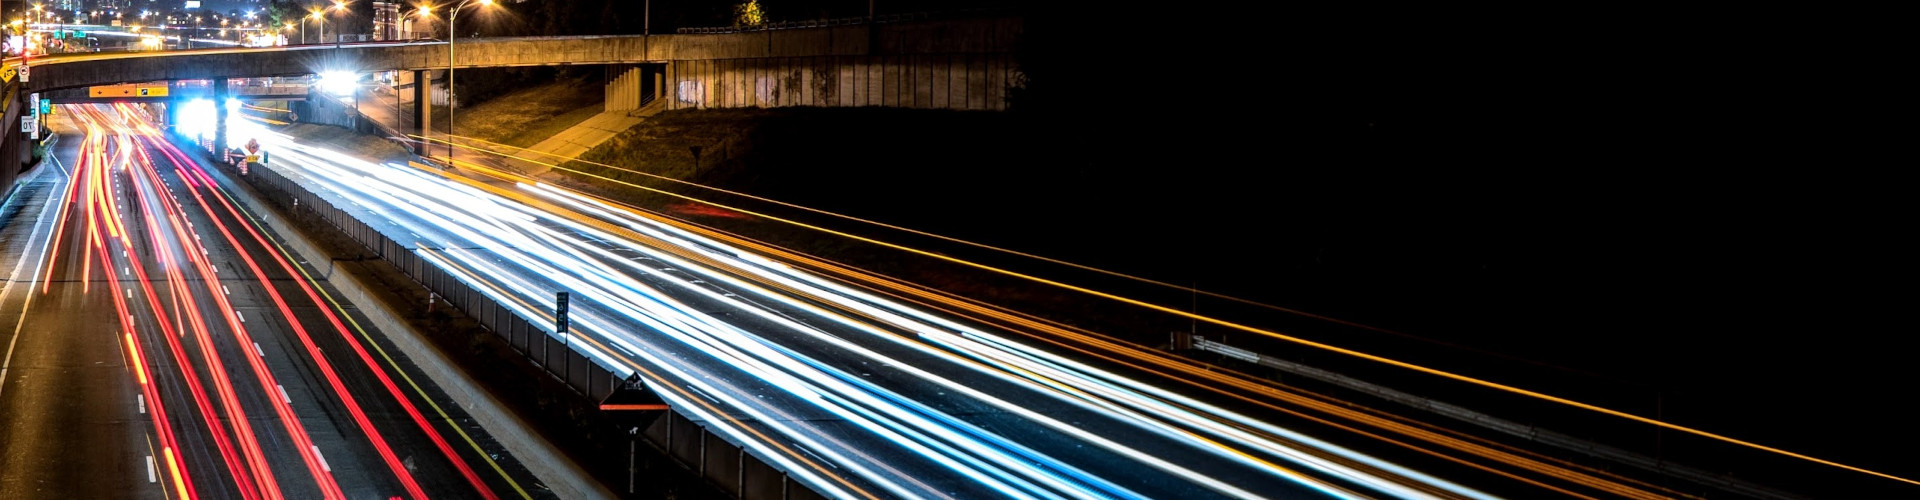 Car lights on long exposure at night